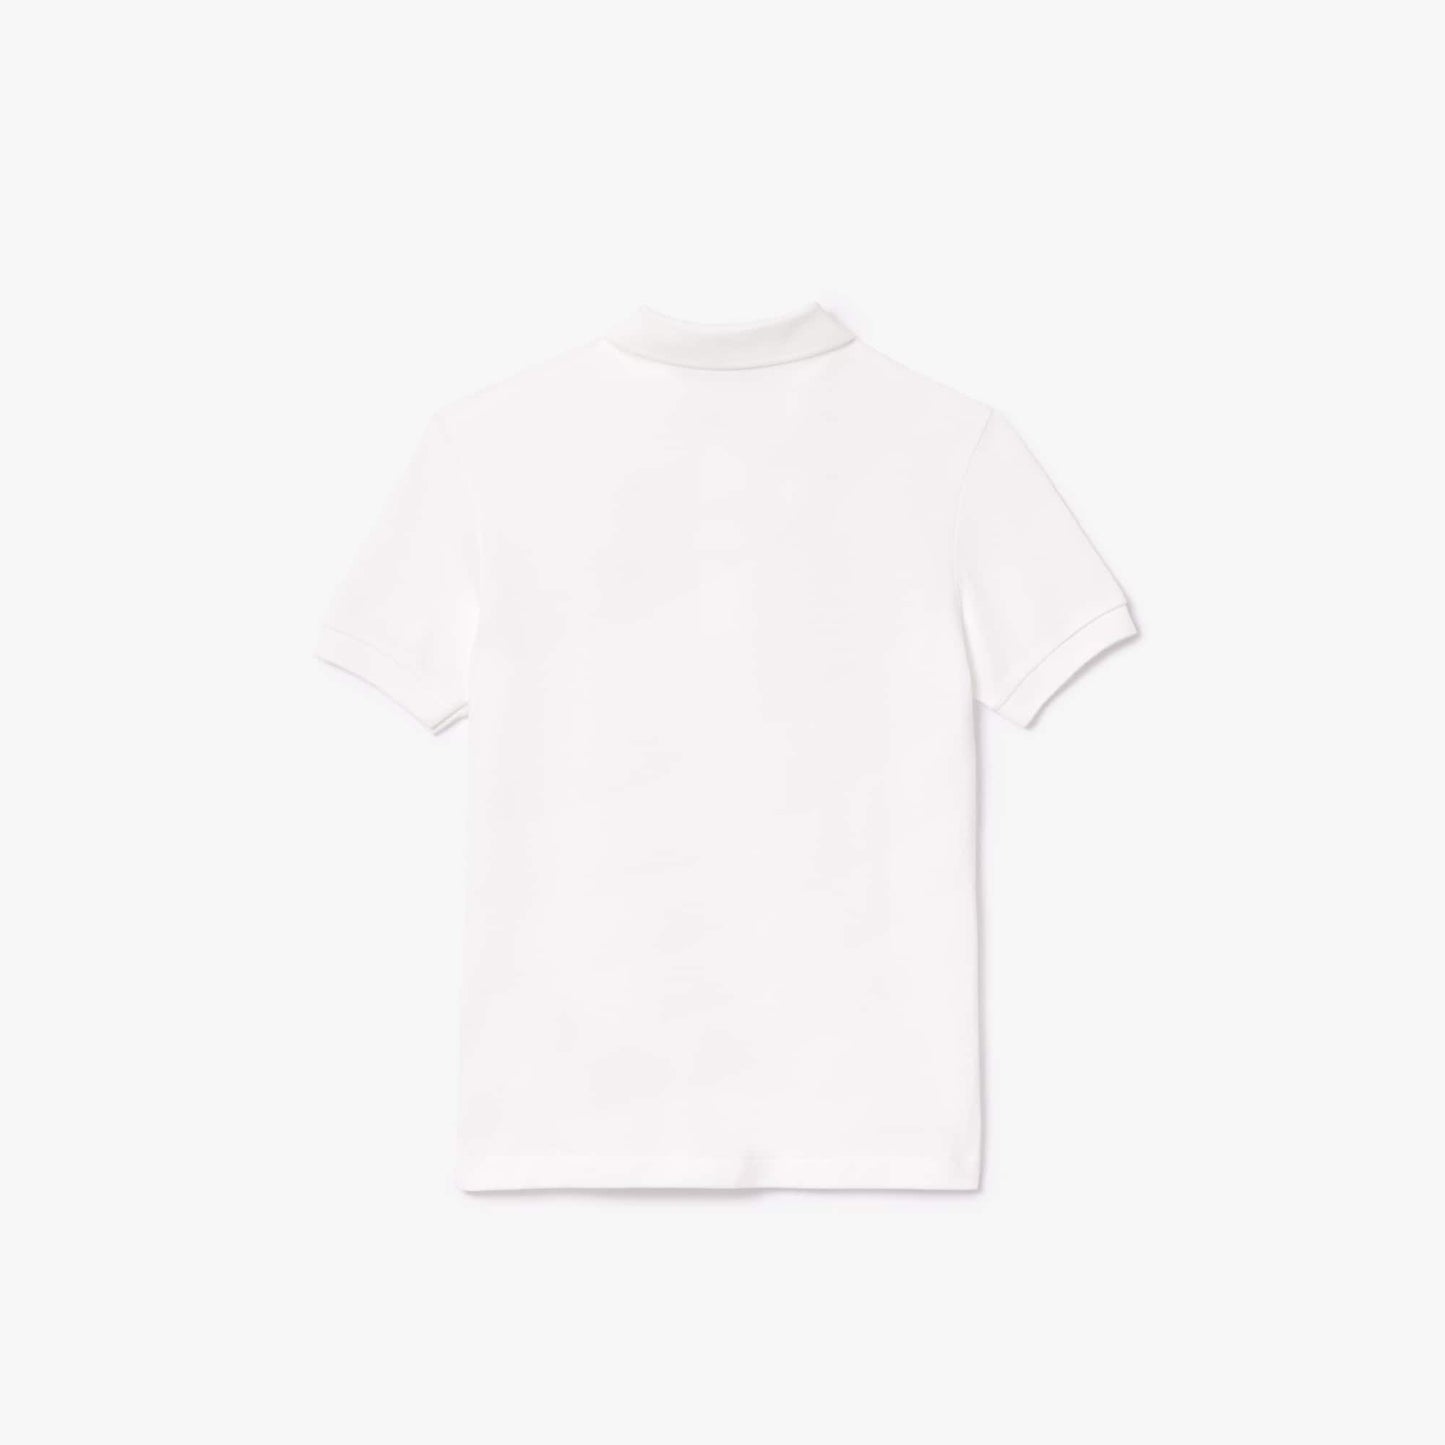 Lacoste boys PJ2909 Polo Shirt (1 Year)